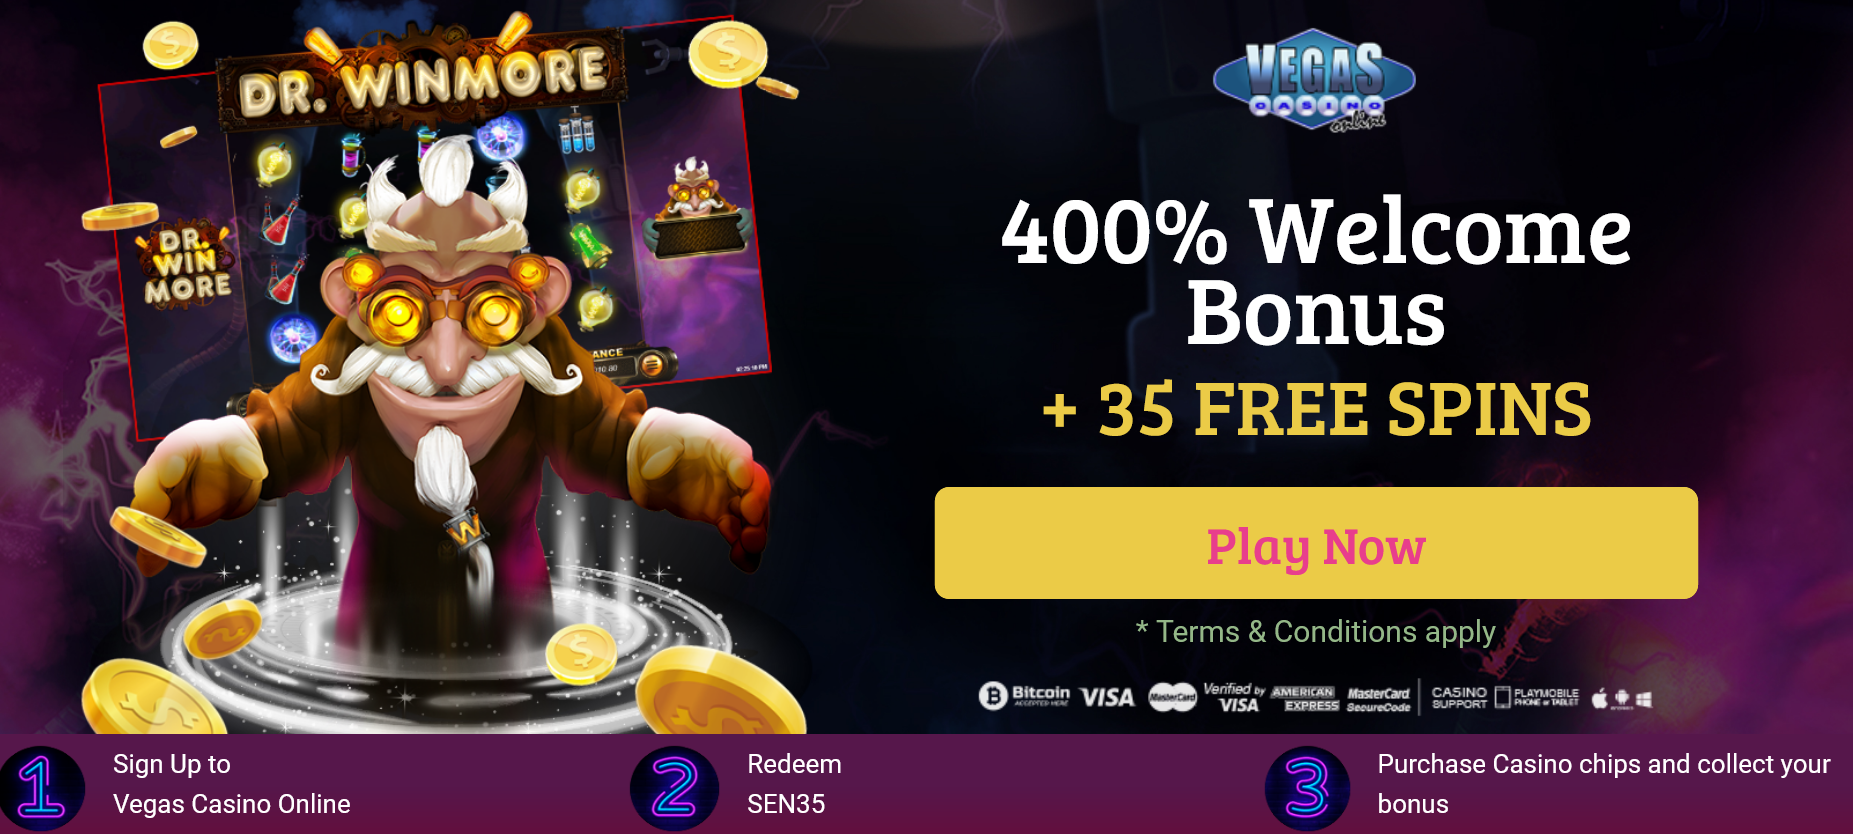 400% Welcome Bonus + 35 FREE SPINS